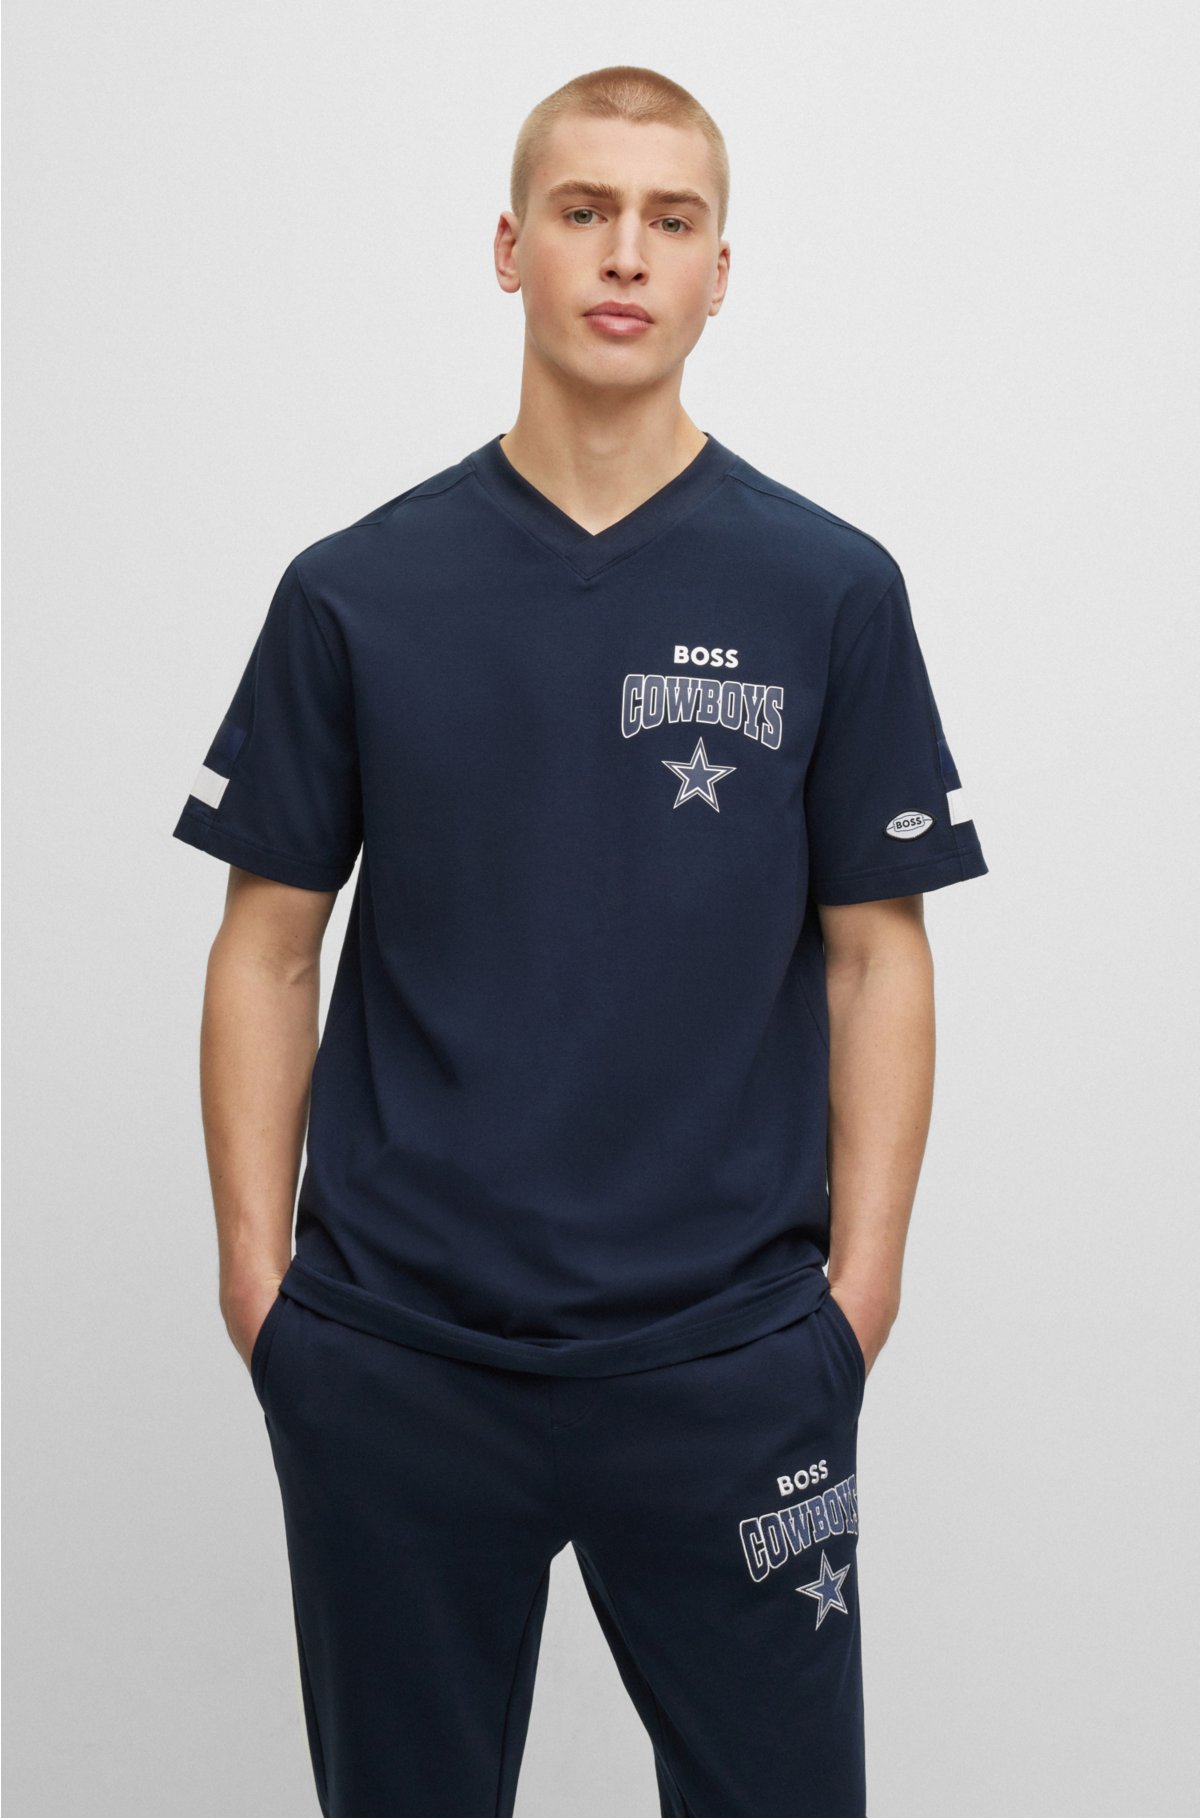 BOSS x NFL cotton-blend T-shirt with collaborative branding, Cowboys